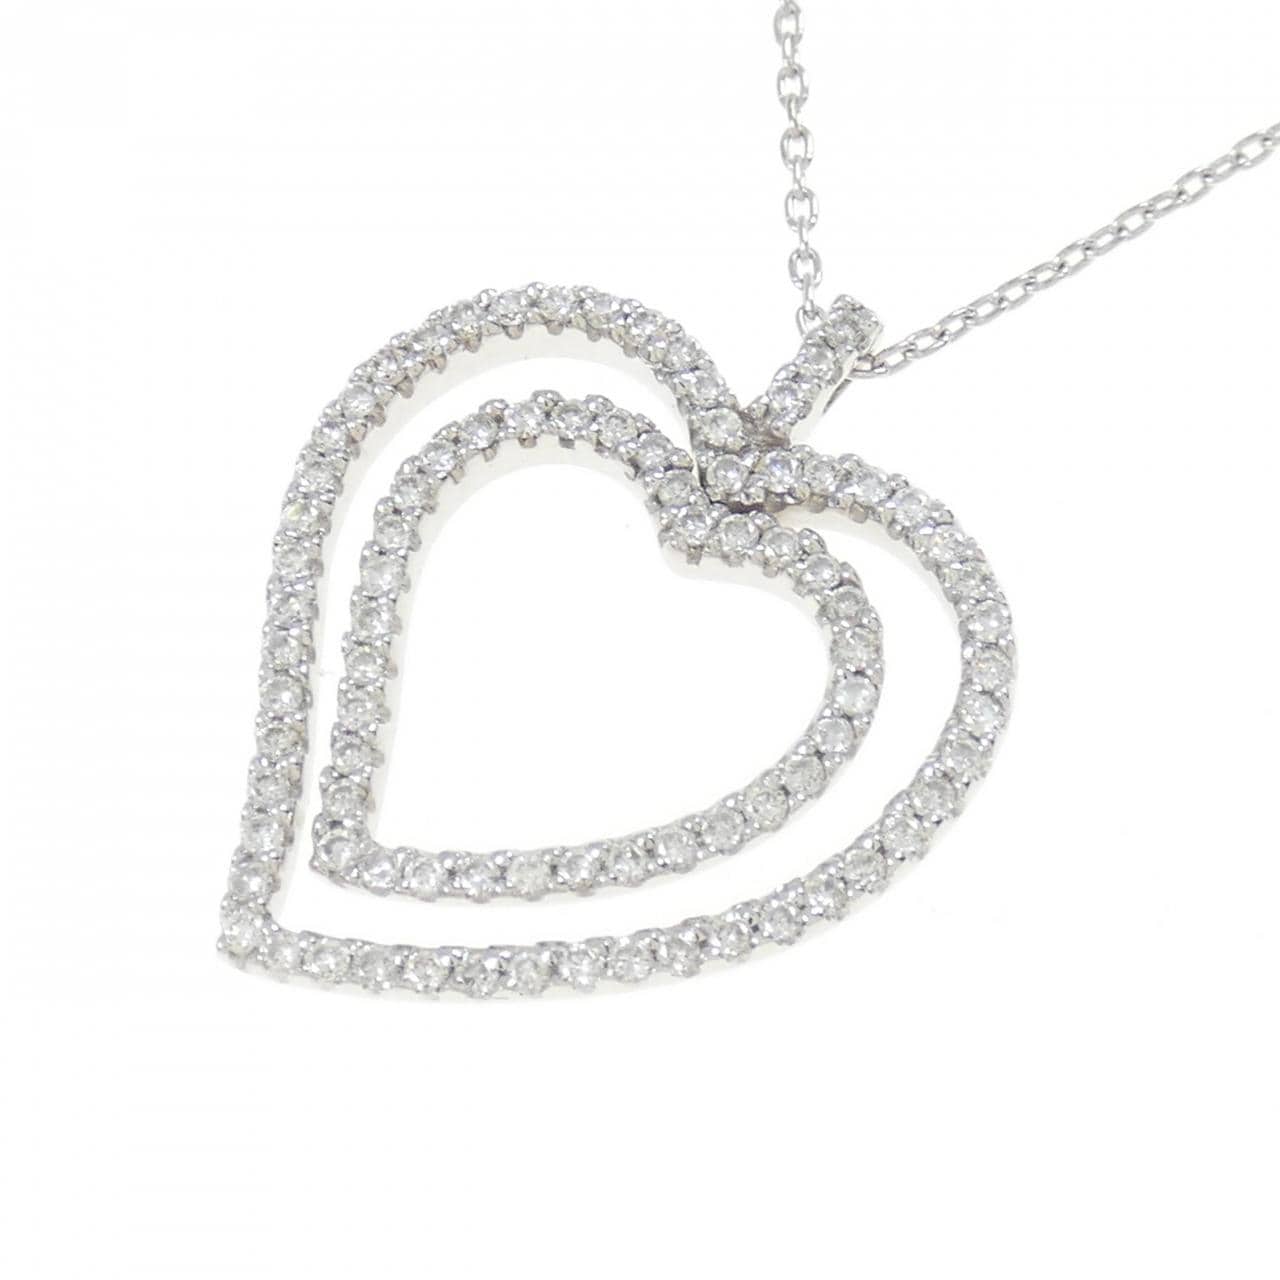 K18WG heart Diamond necklace 0.41CT